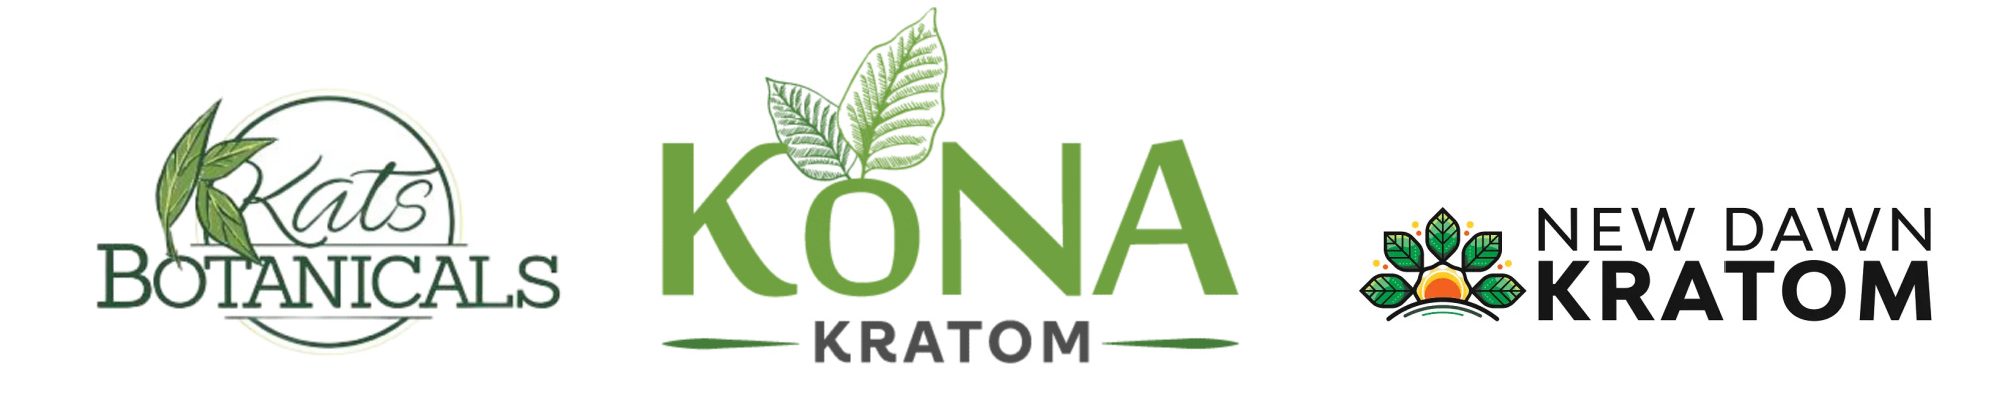 image of online kratom shops you can trust